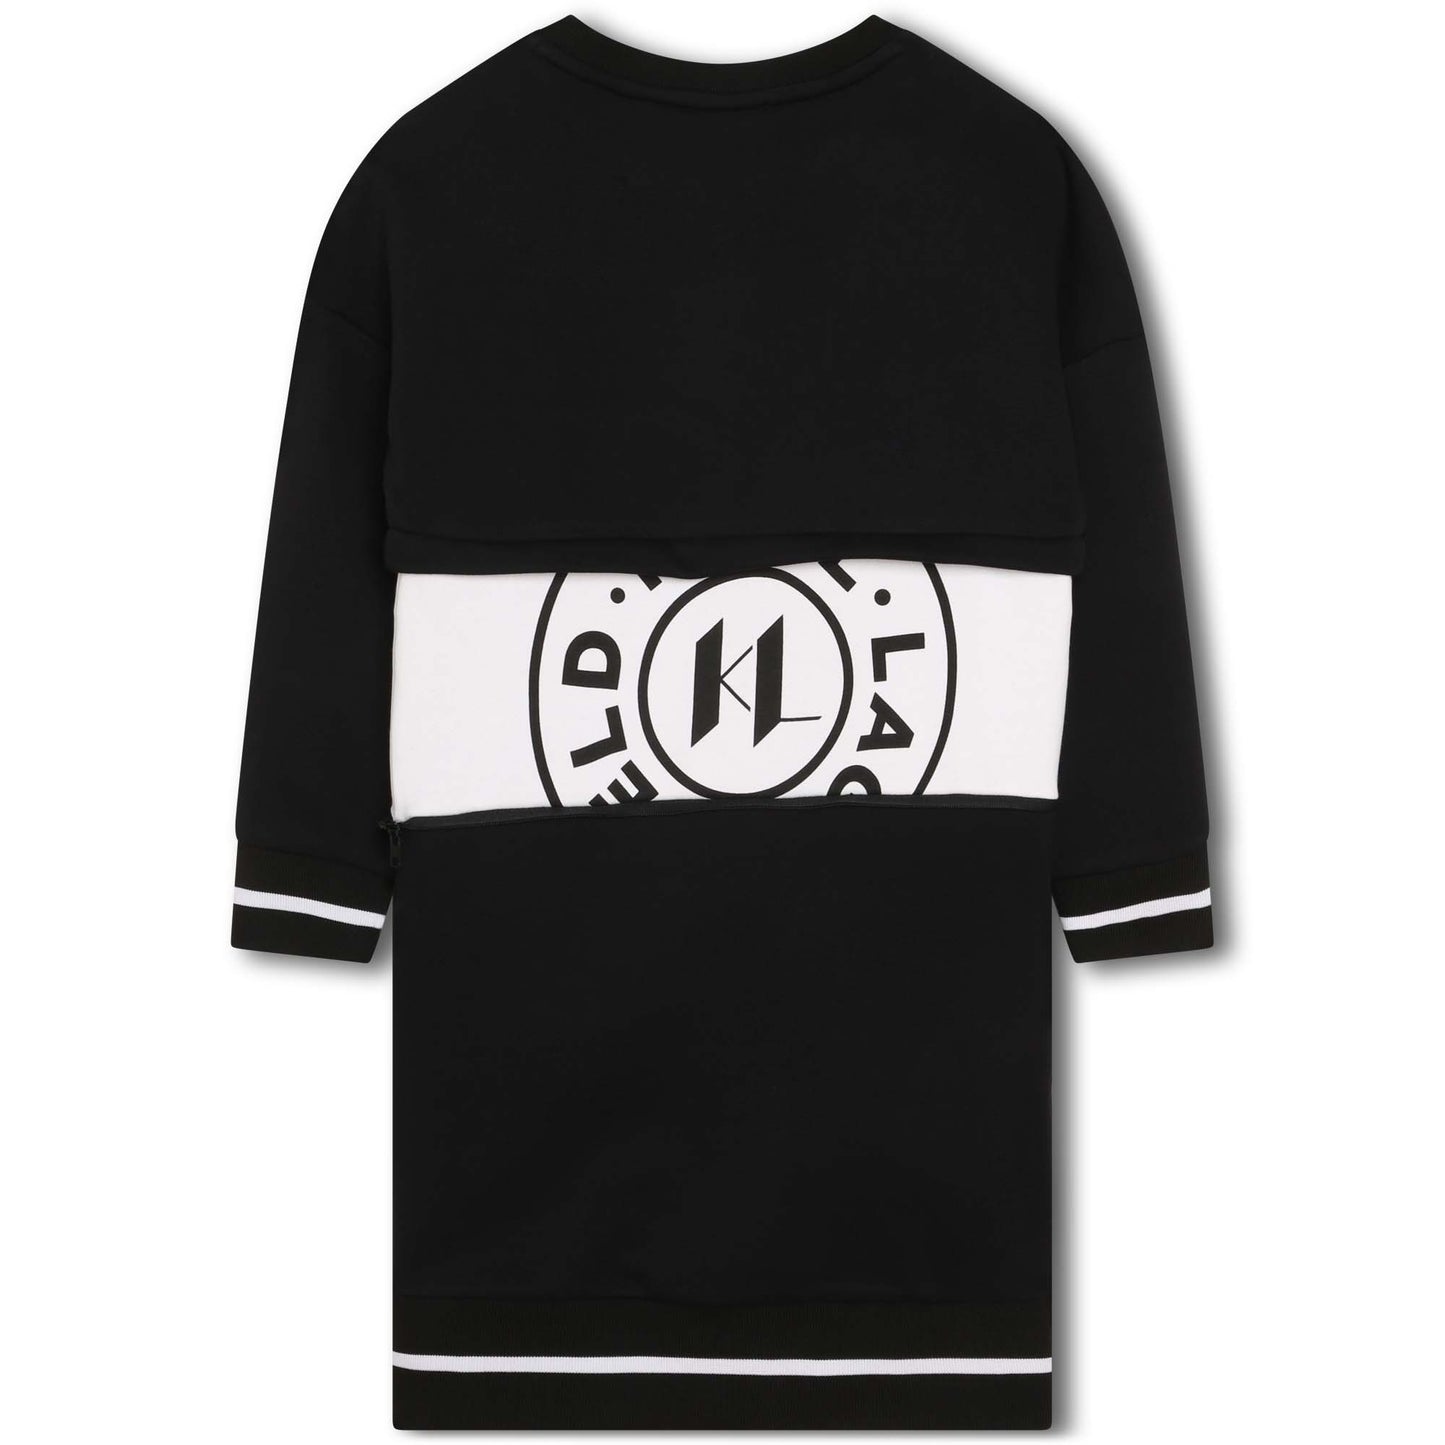 Karl Lagerfeld Sweater Dress w/ Front Logo Print